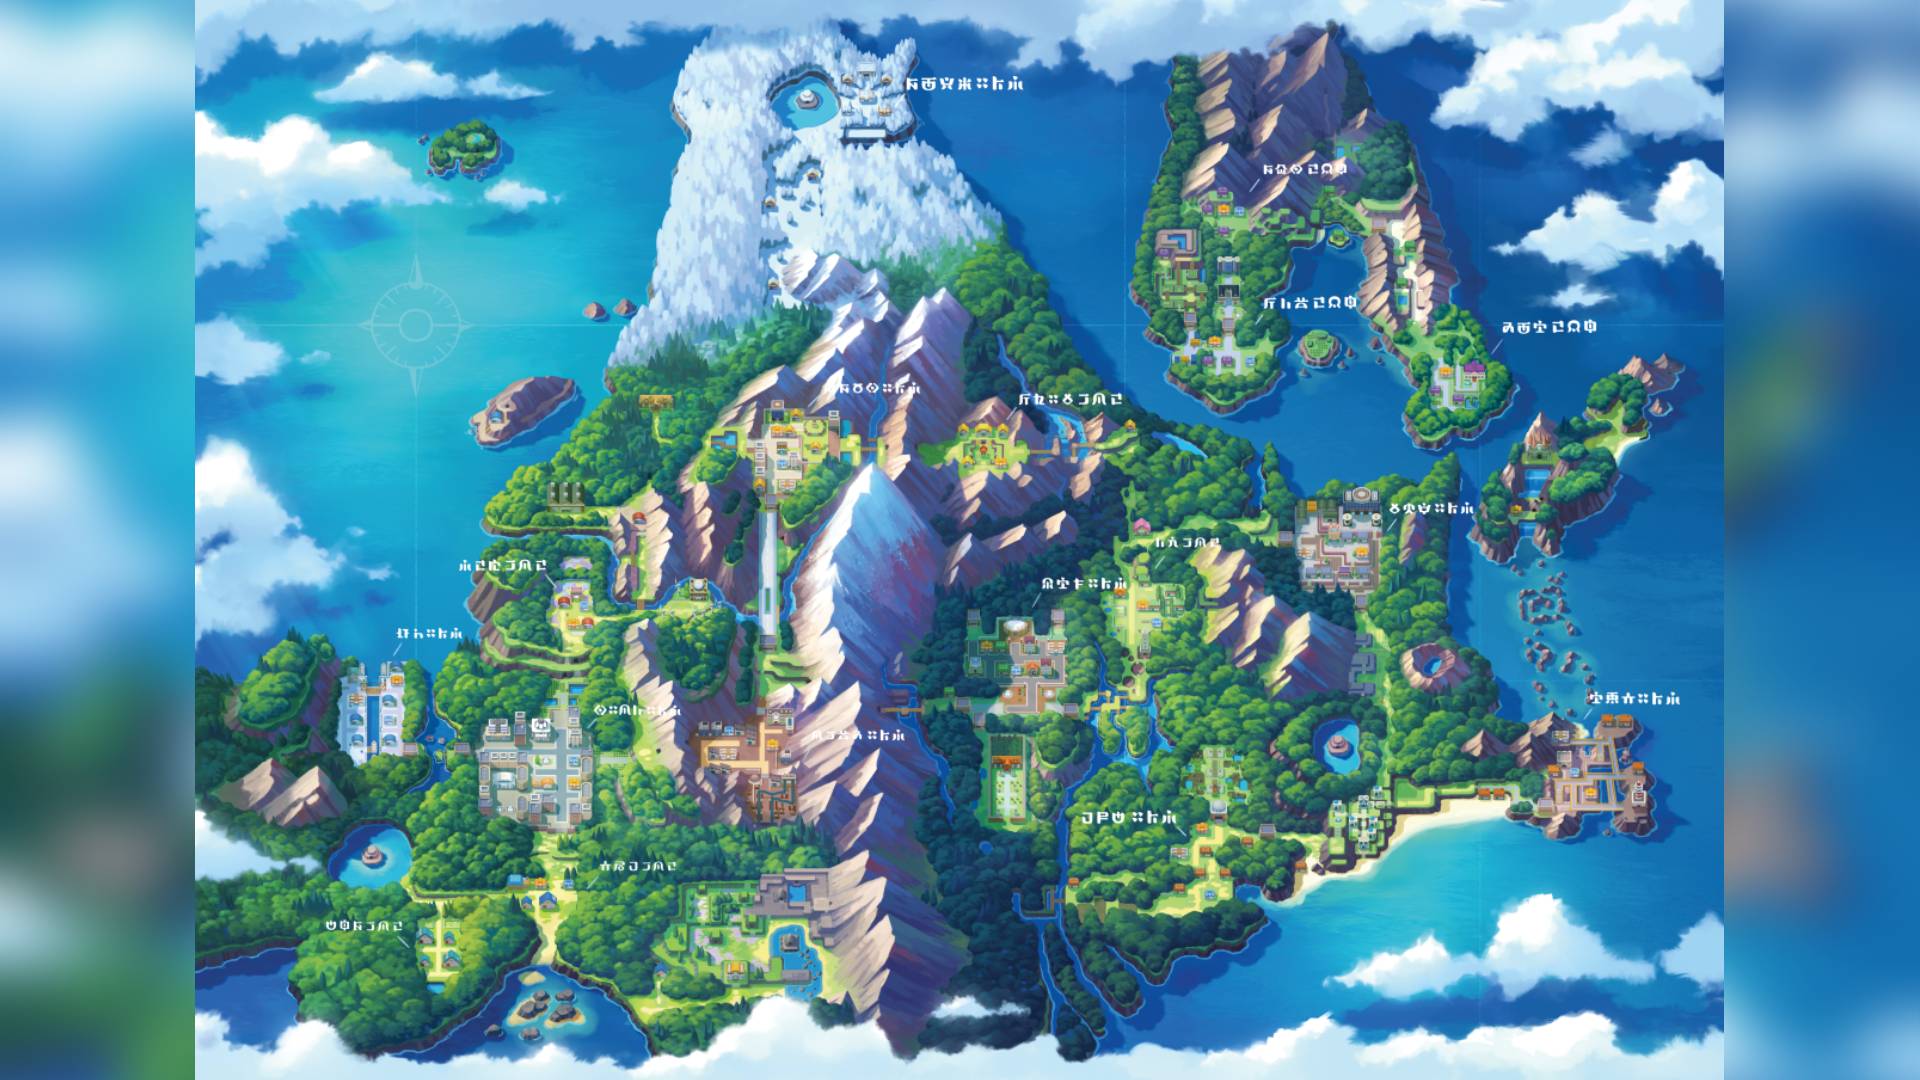 Pokémon's Kanto region gets stunning map for Pokémon: Let's Go! - Polygon